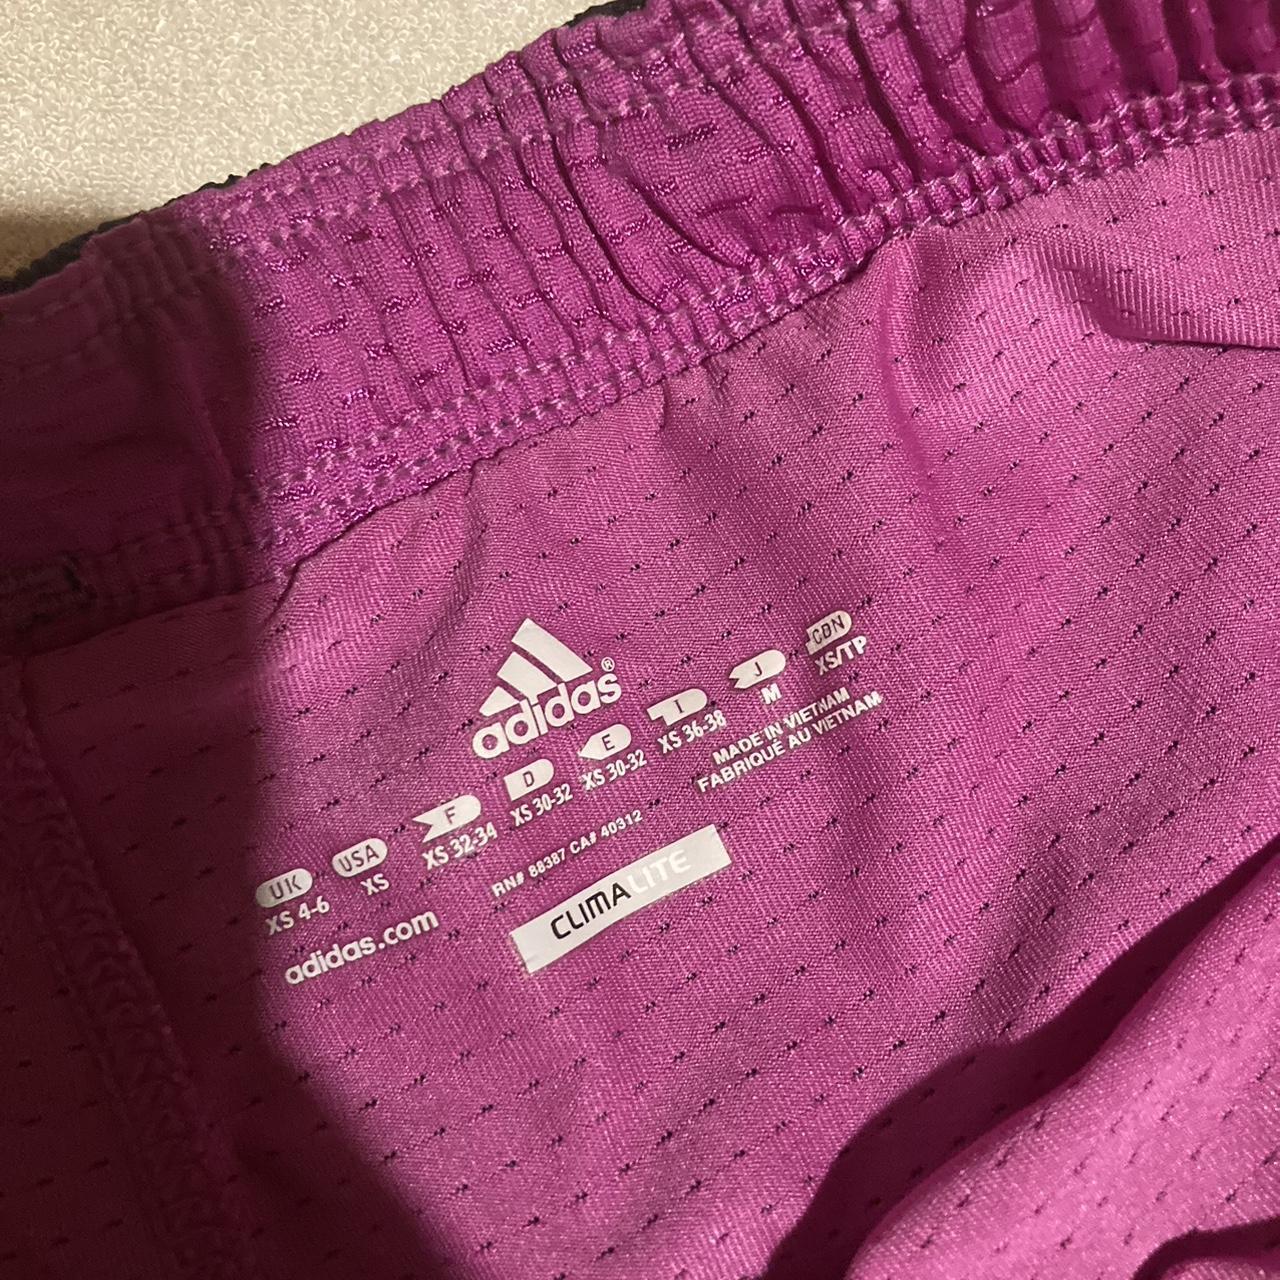 Adidas Women's Black and Pink Shorts | Depop